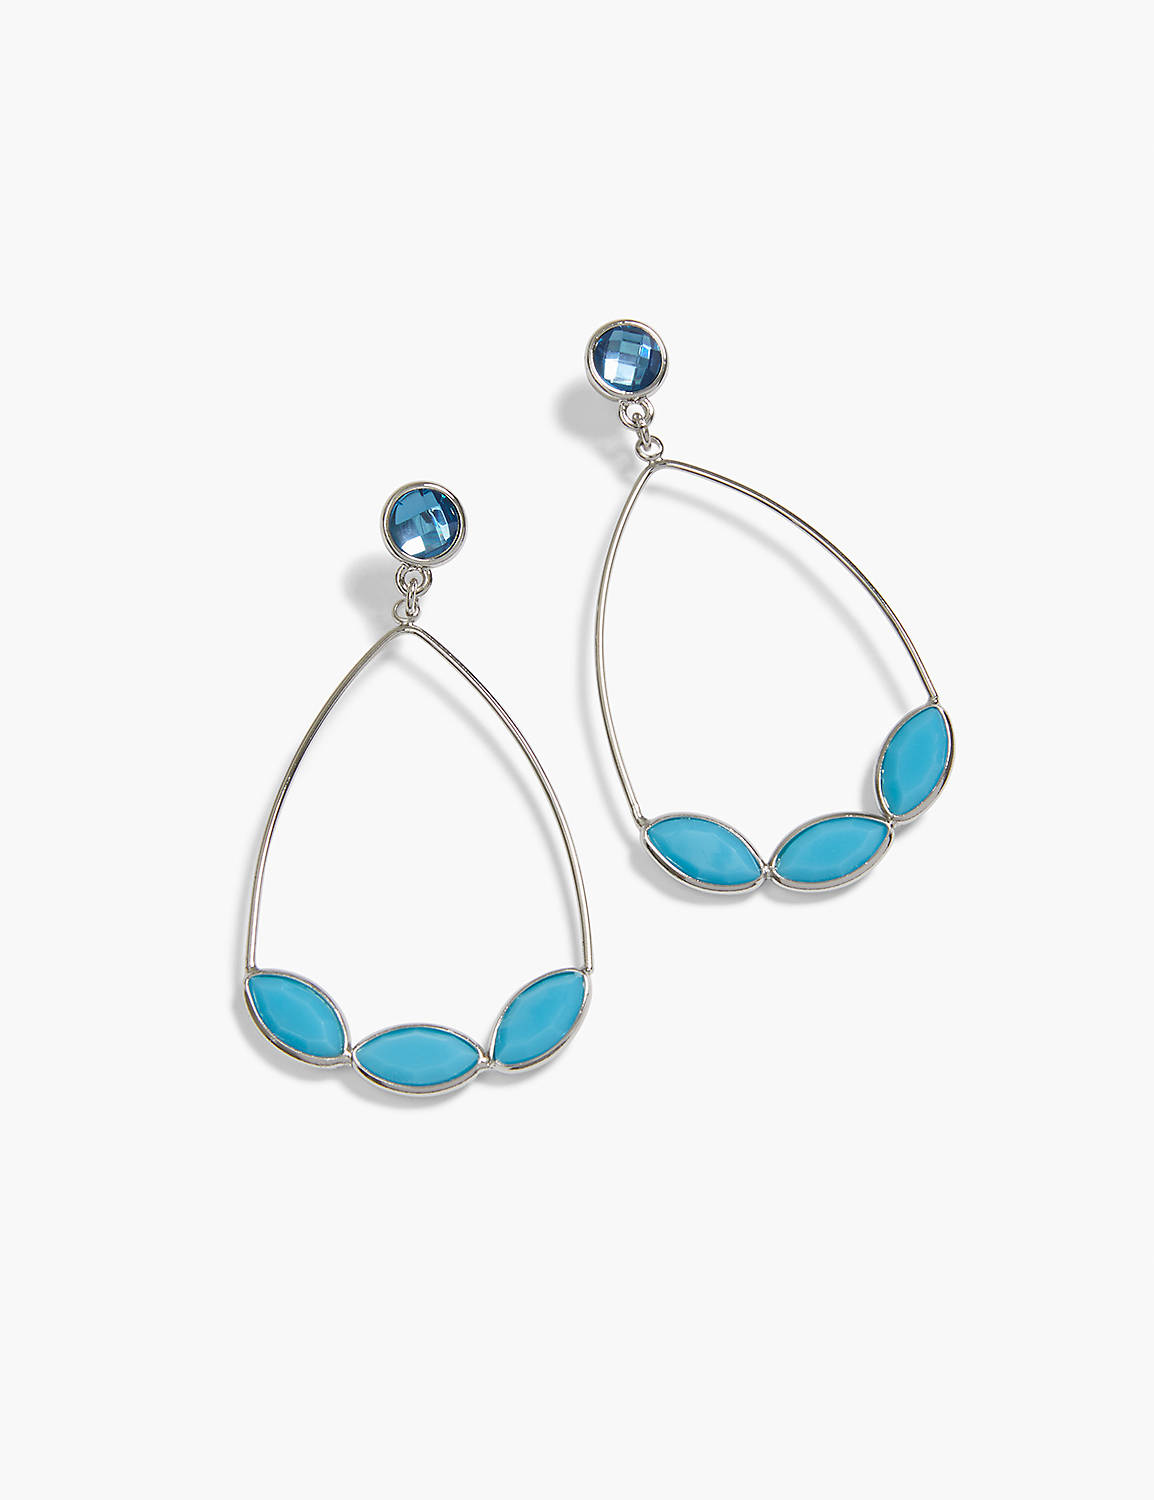 Blue Crystal Drop Earrings Product Image 1